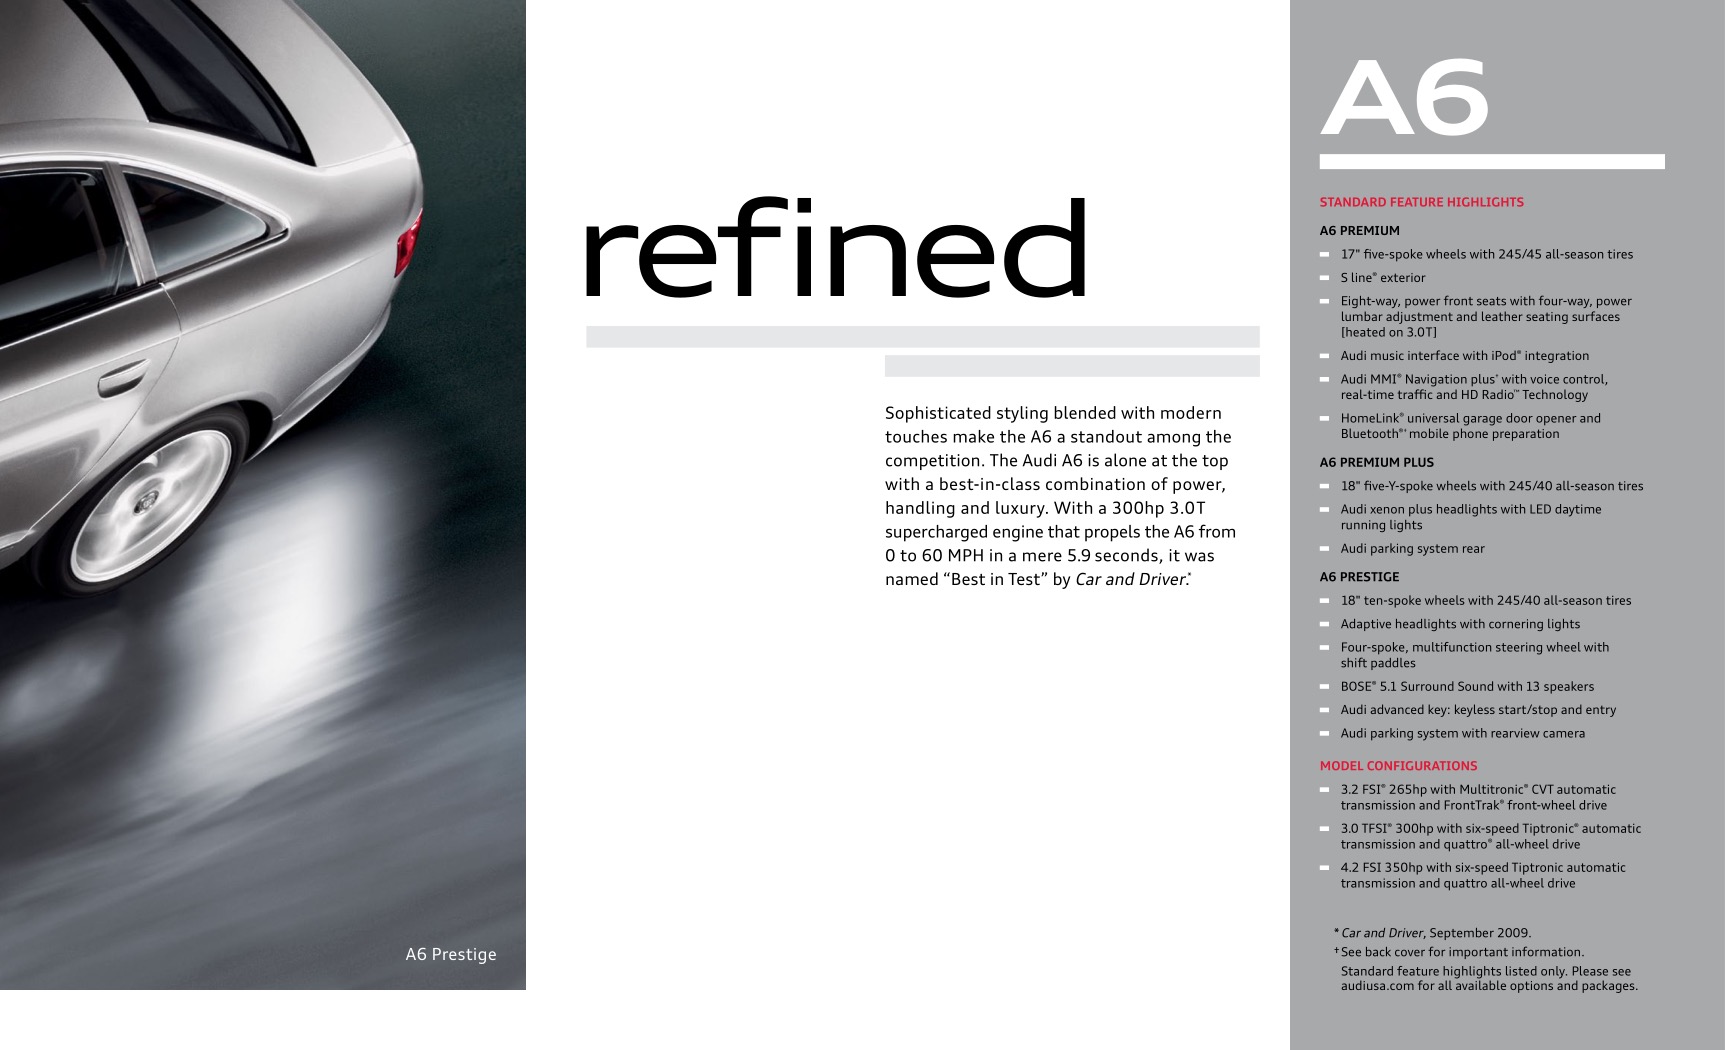 2011 Audi Brochure Page 8